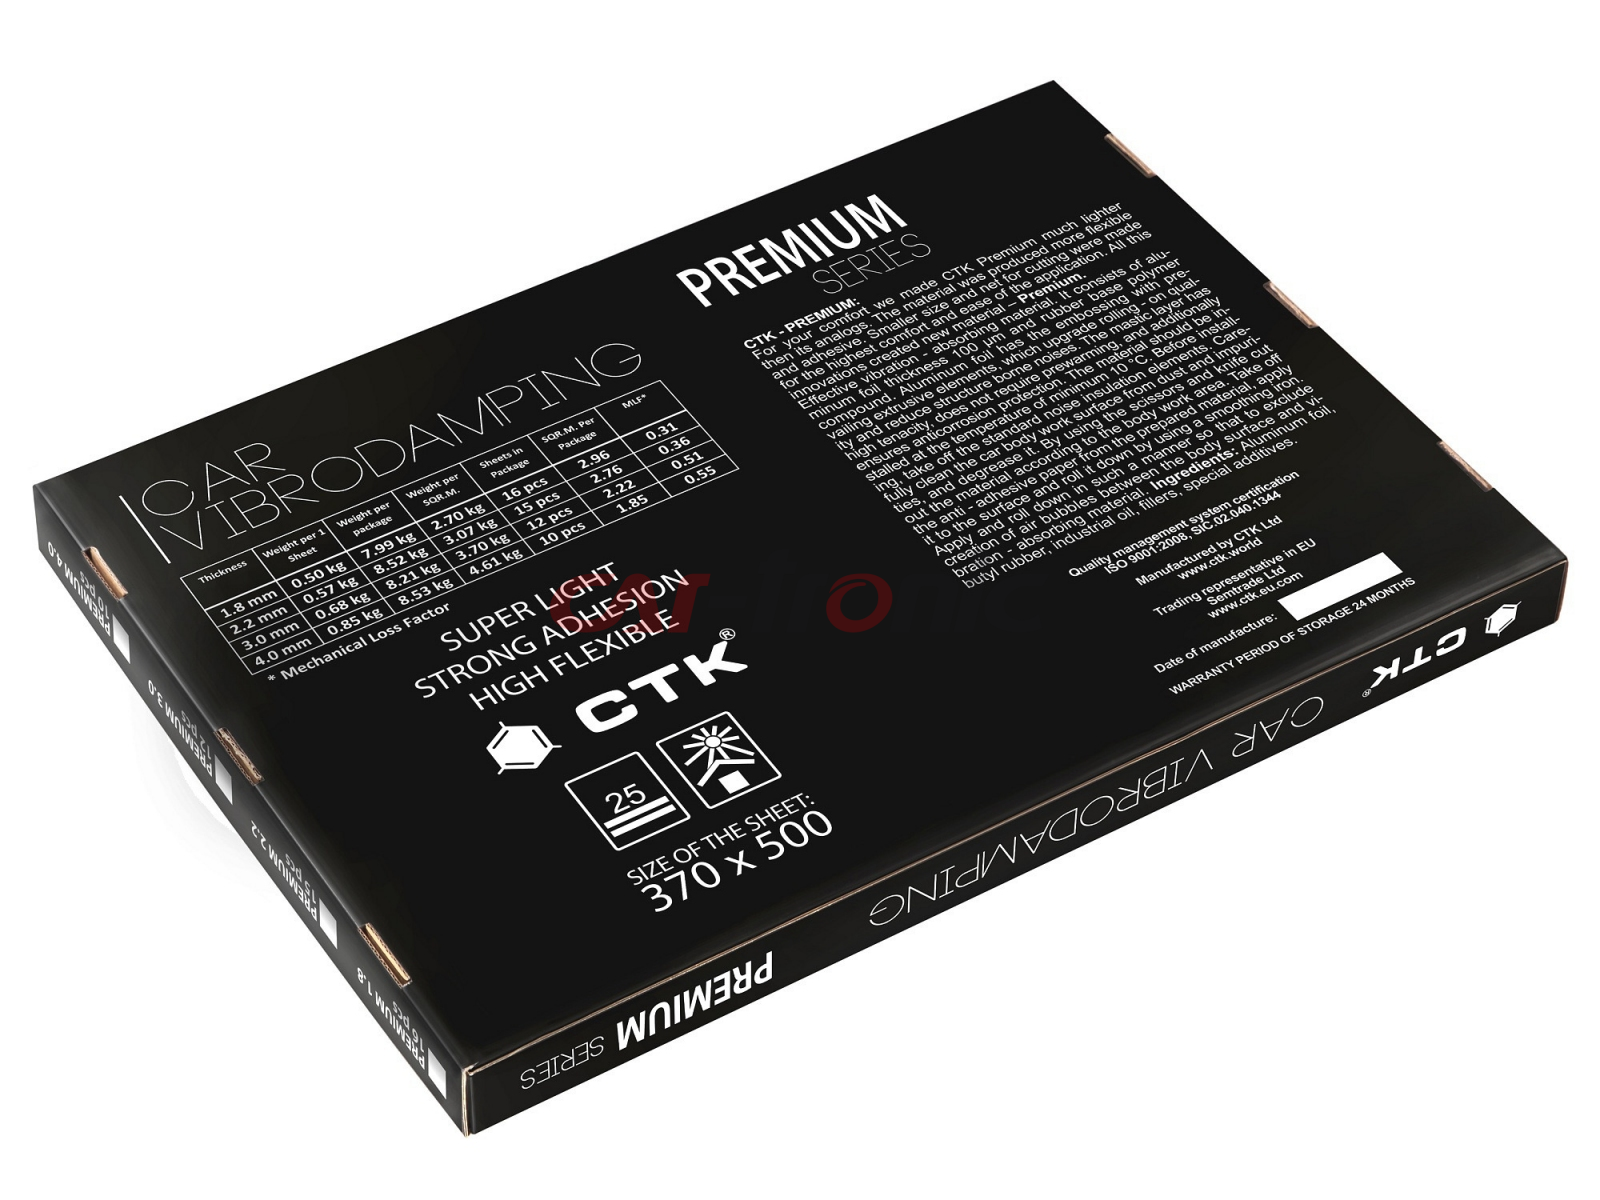 CTK Premium 4.0 Box - mata tłumiąca, 10szt./1,85m2